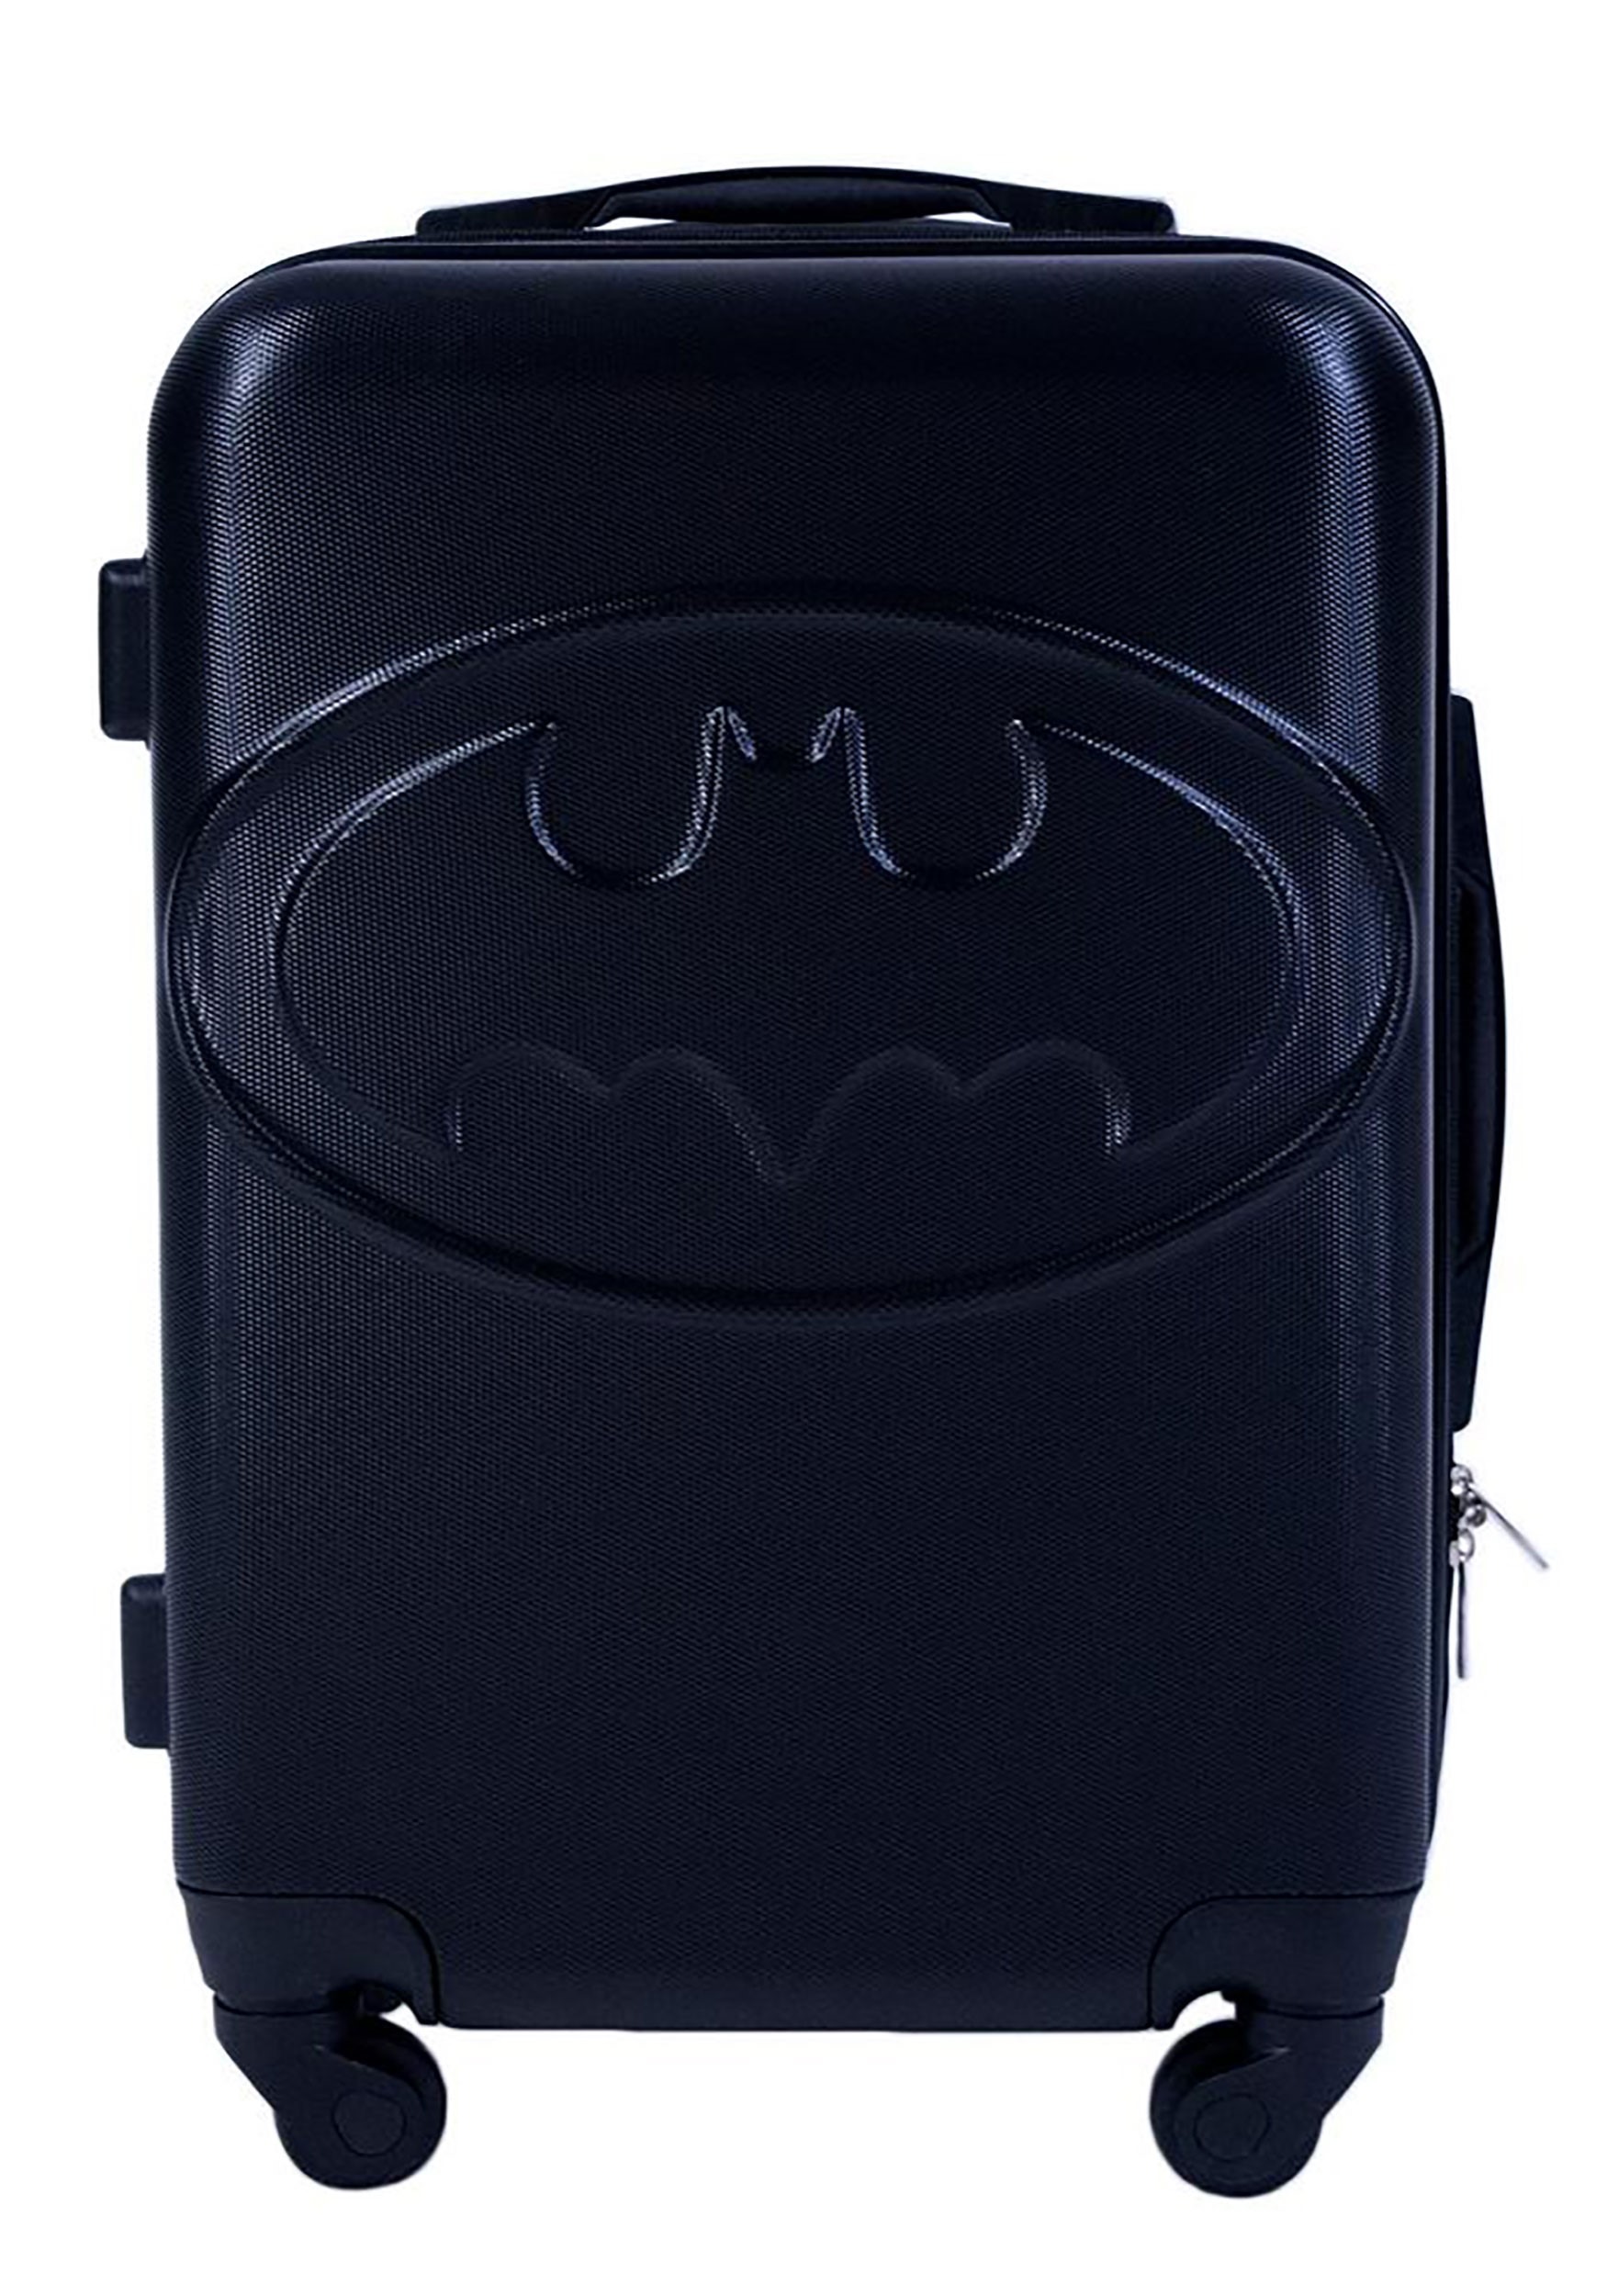 Batman Black Wheeled Carry-On Suitcase